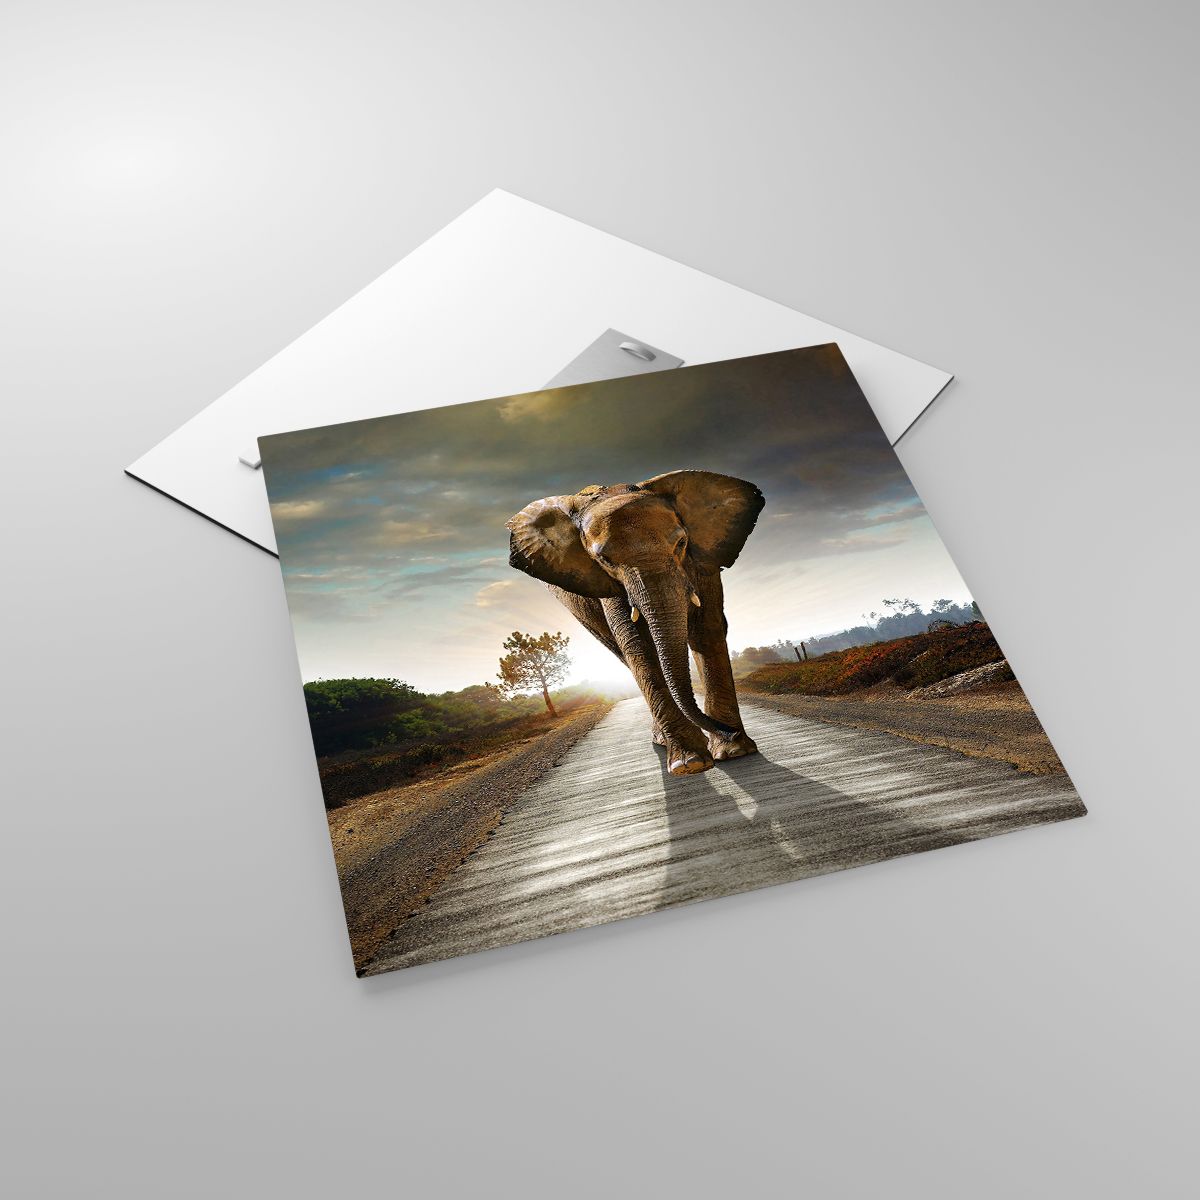 Glasbild Elefant, Glasbild Landschaft, Glasbild Natur, Glasbild Bäume, Glasbild Afrika